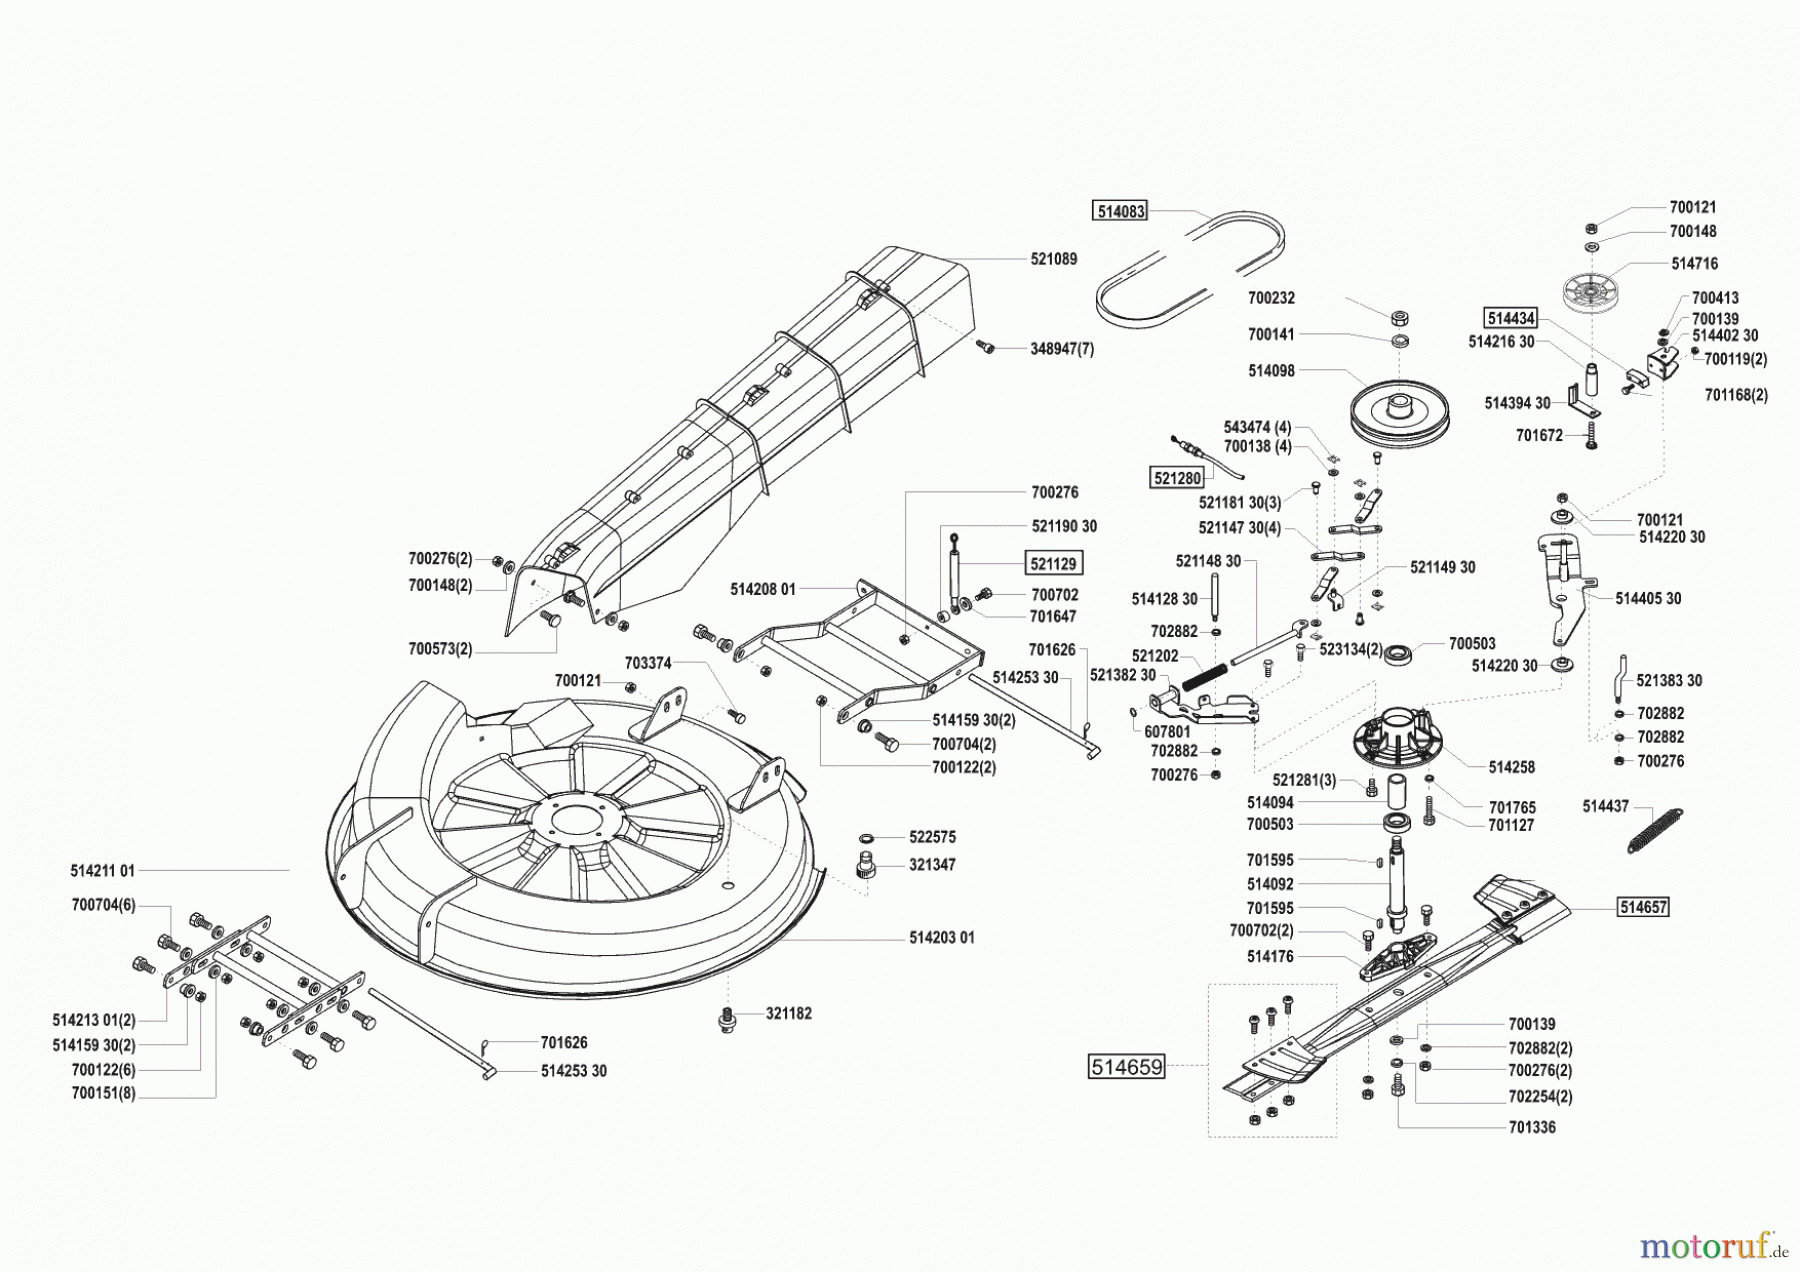  AL-KO Gartentechnik Rasentraktor T-800 08/2001 - 02/2002 Seite 5